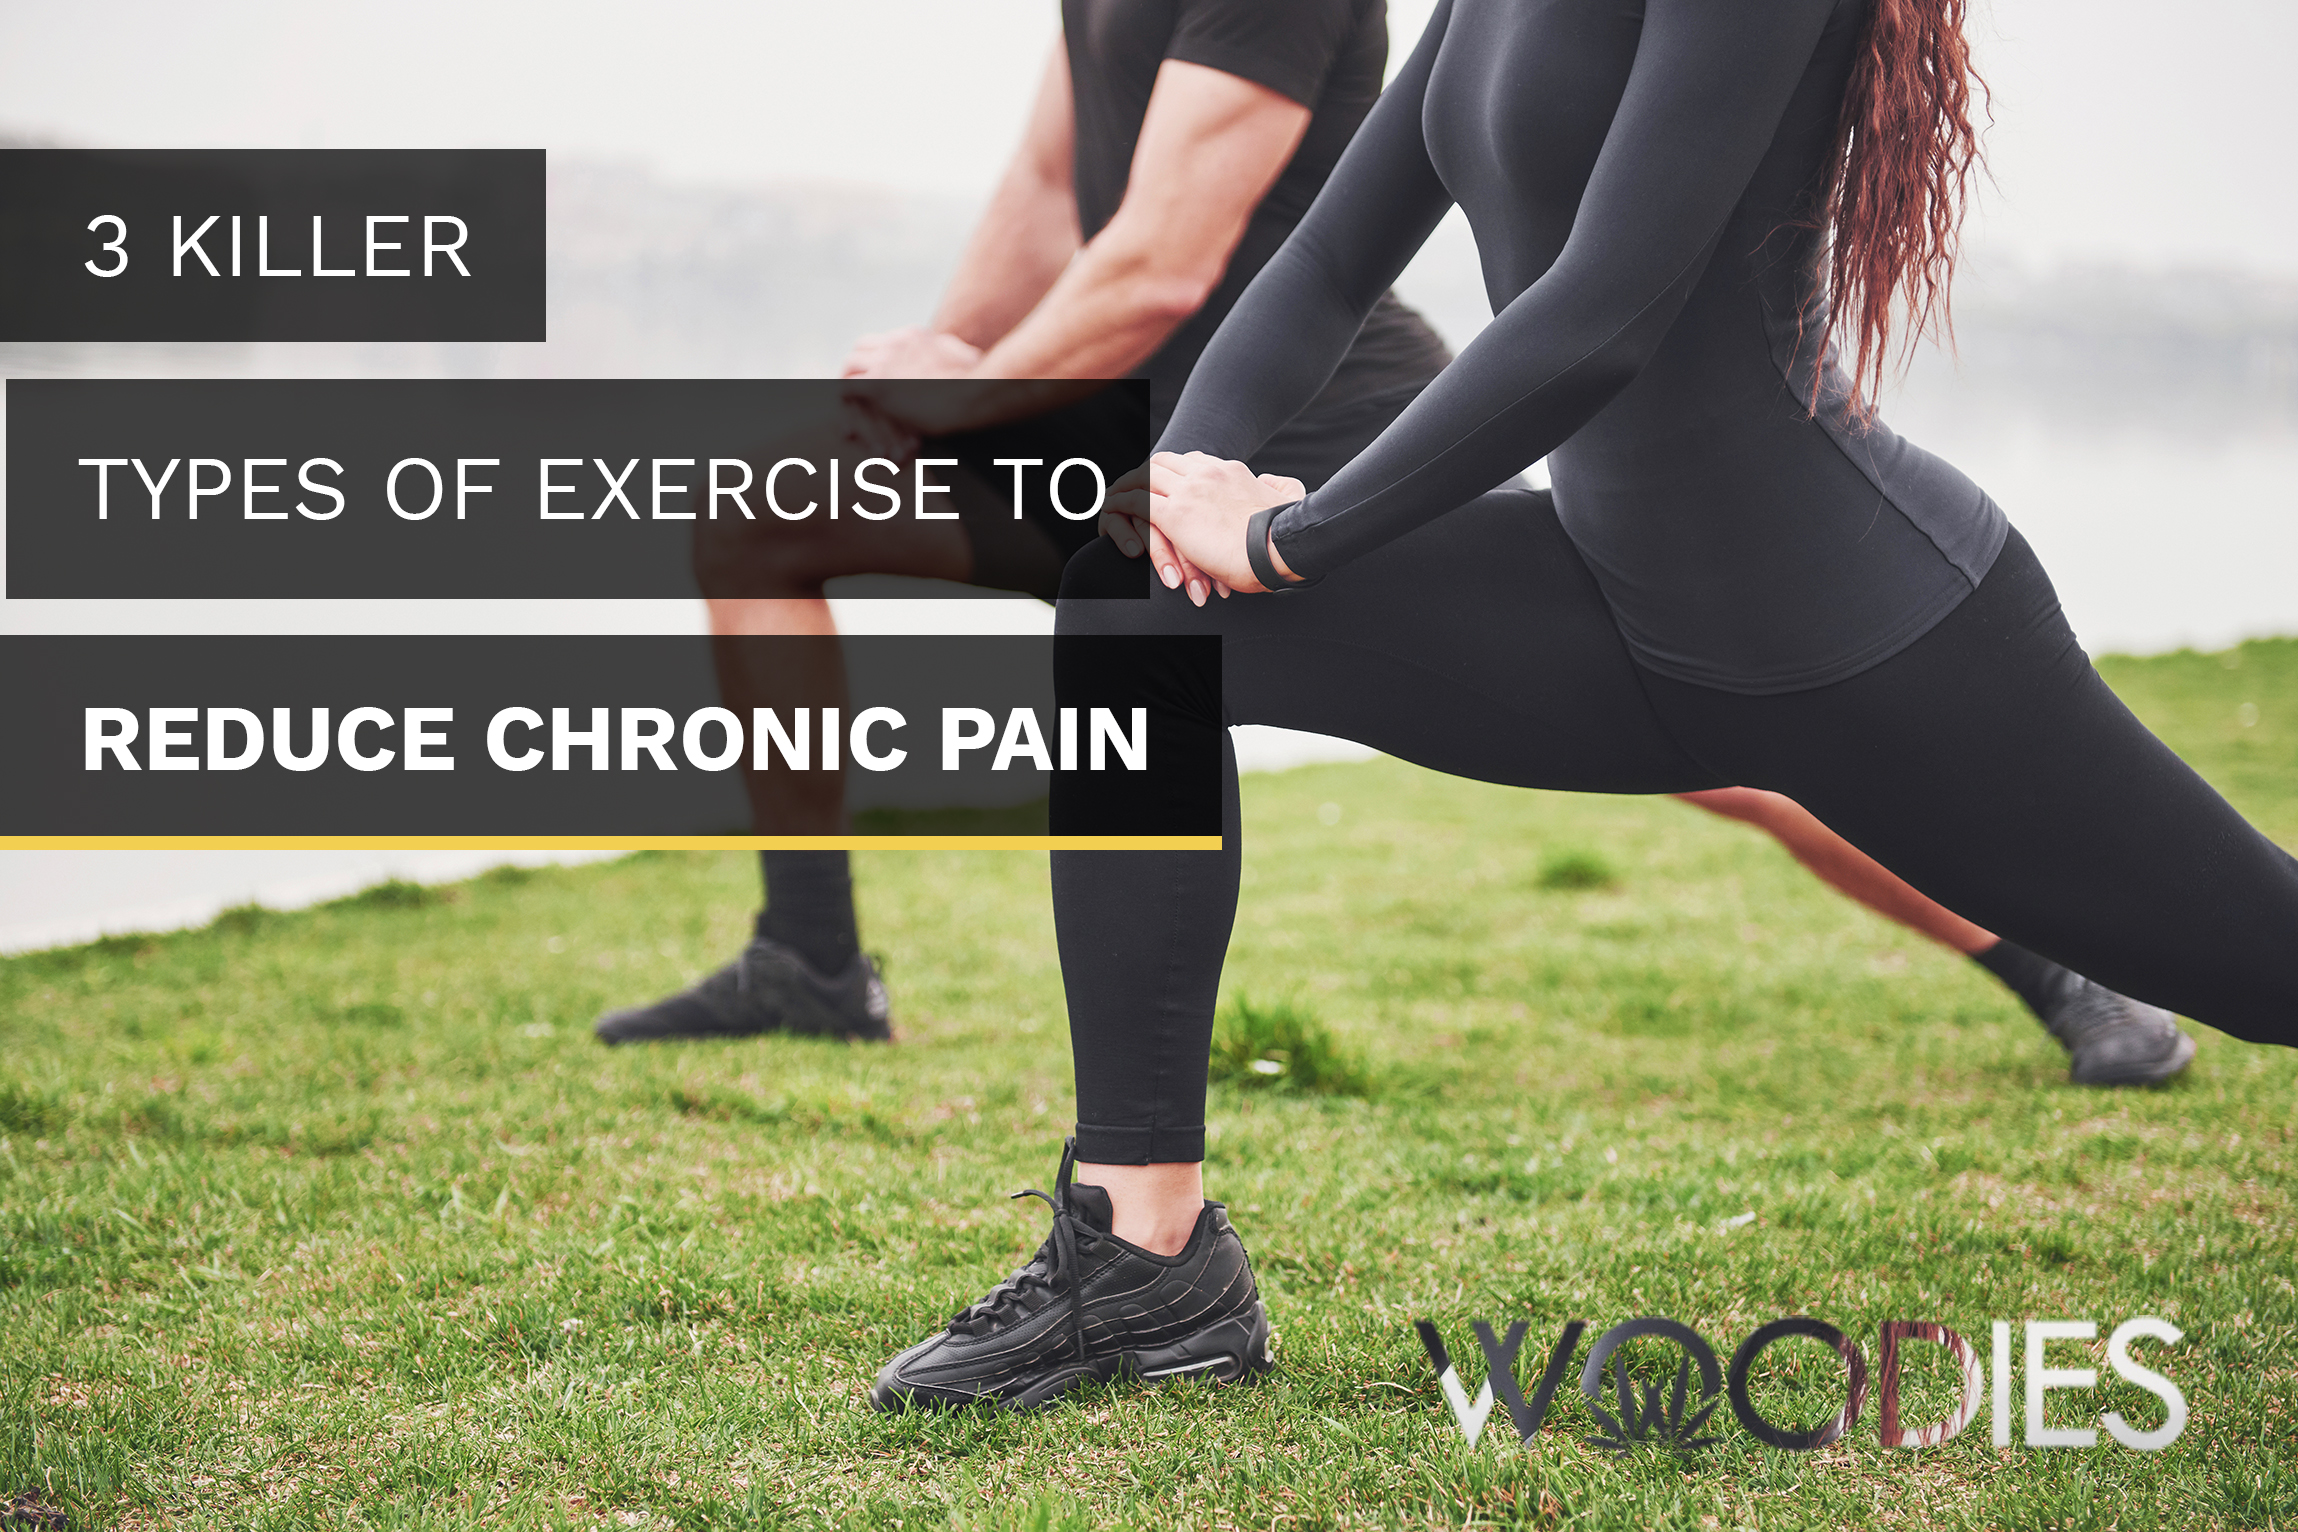 Reduce Chronic Pain